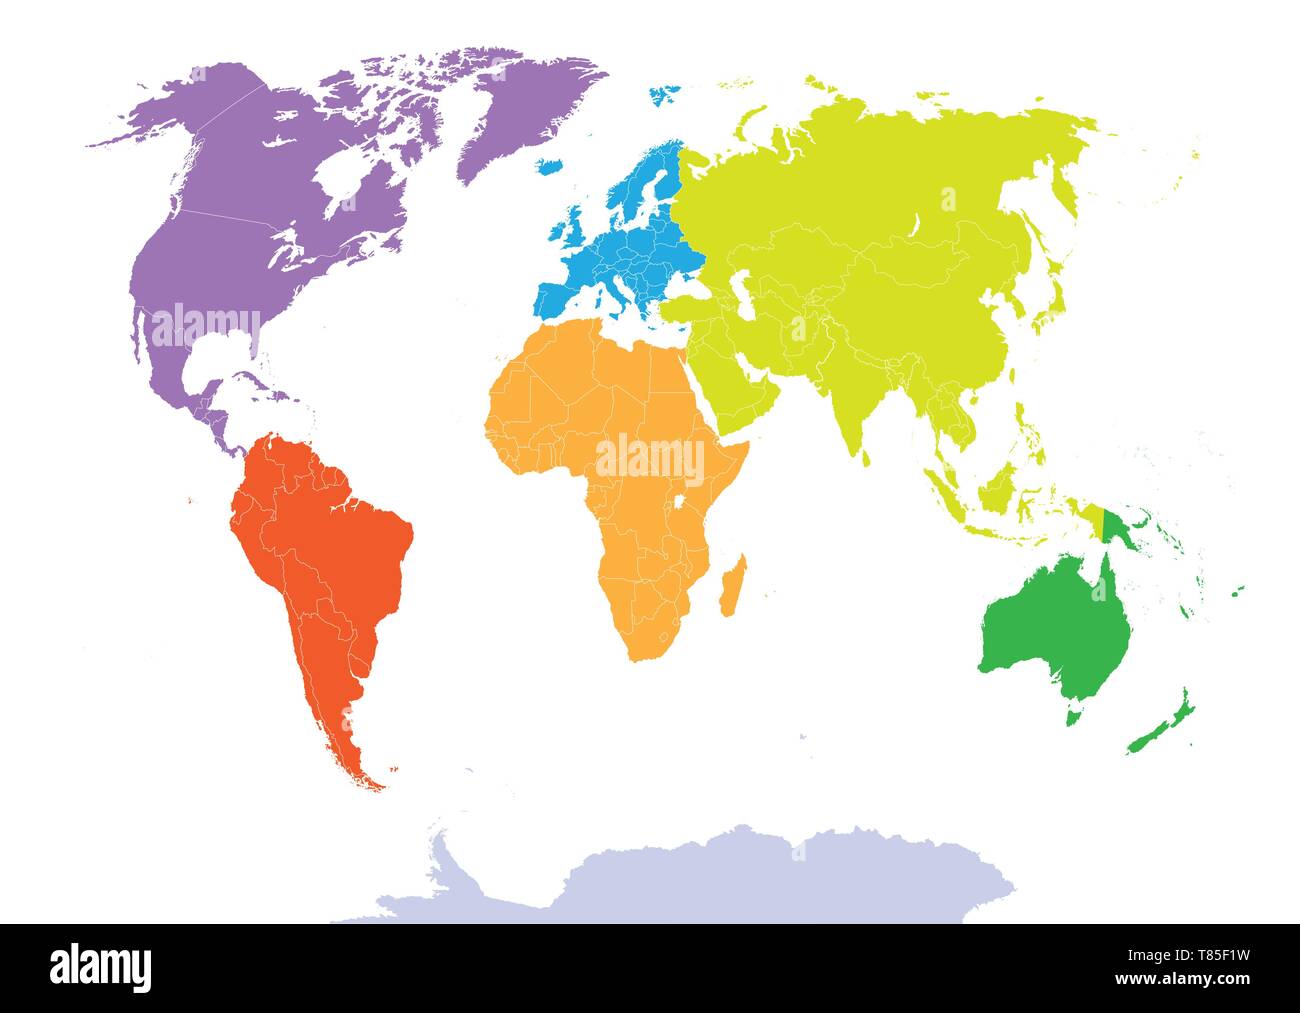 vector high detailed world map illustration Stock Vector